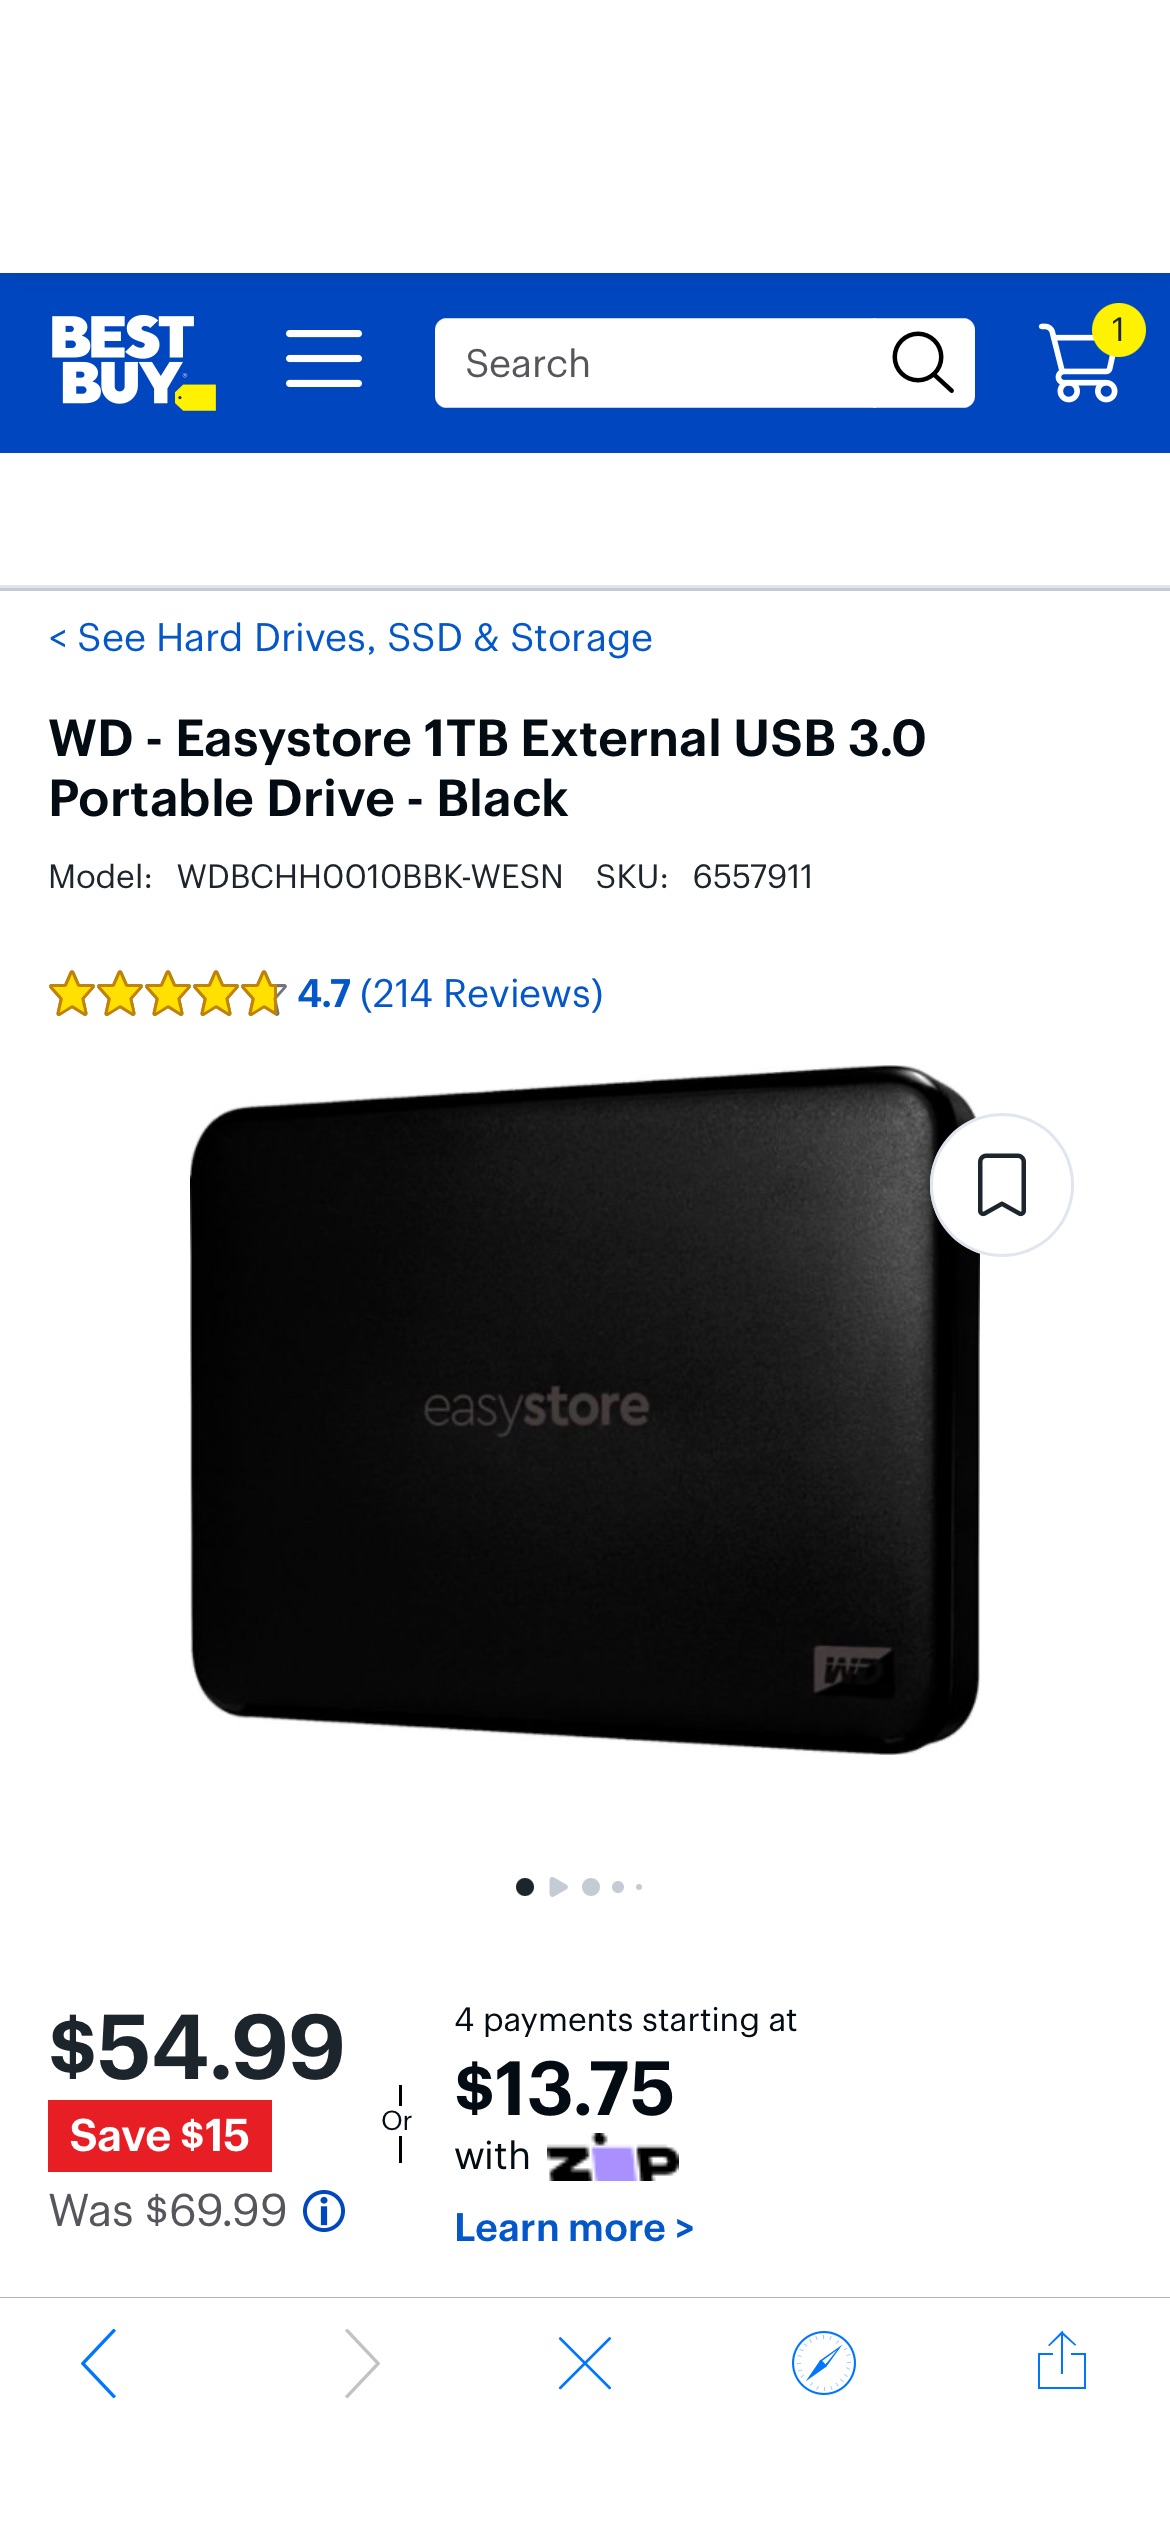 WD Easystore 1TB External USB 3.0 Portable Drive Black WDBCHH0010BBK-WESN - Best Buy